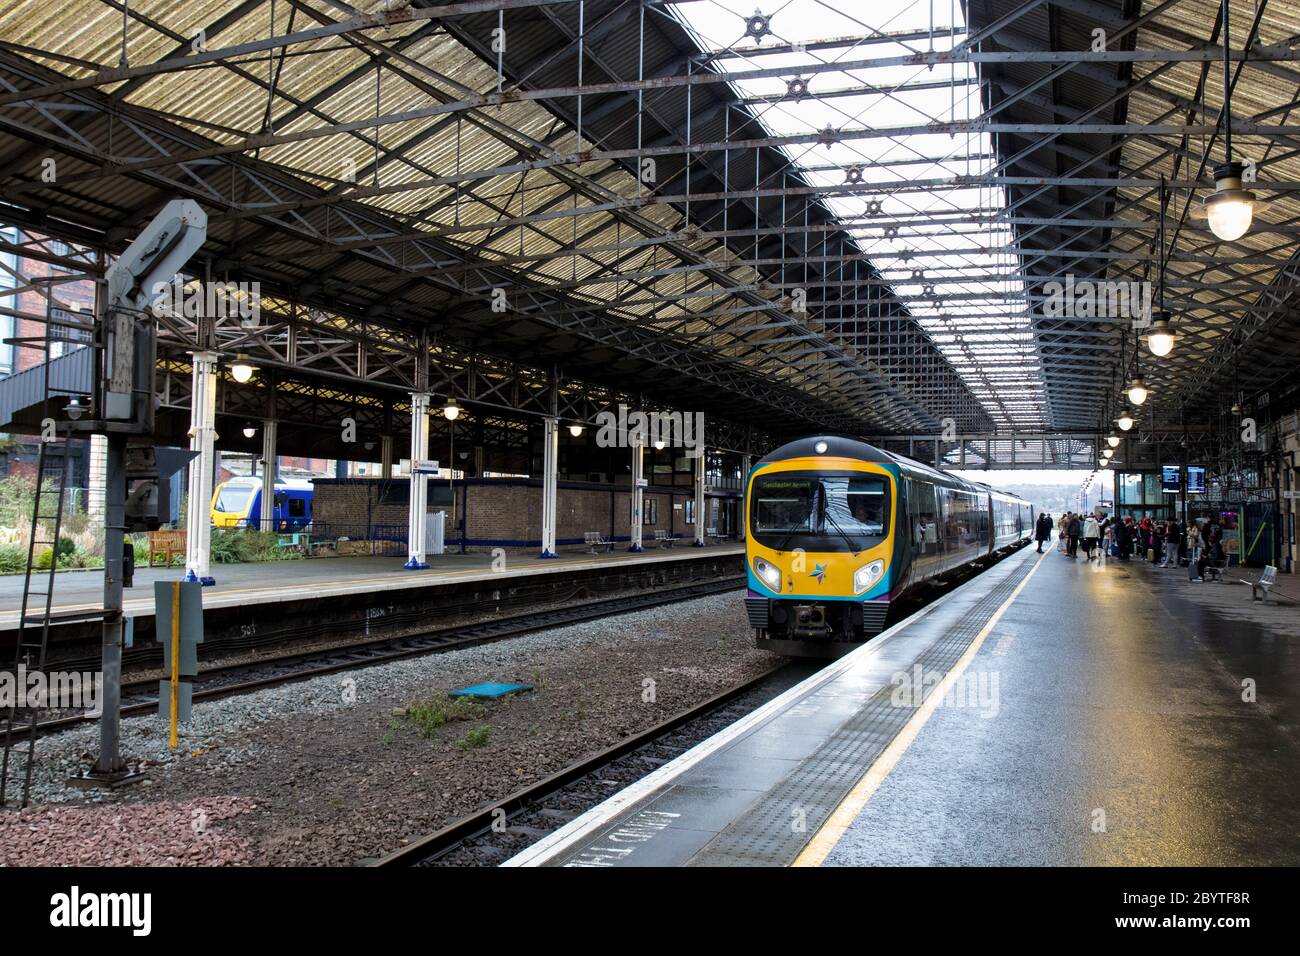 A TransPennine Expressl passenger train at Huddersfield Railway Station Stock Photo